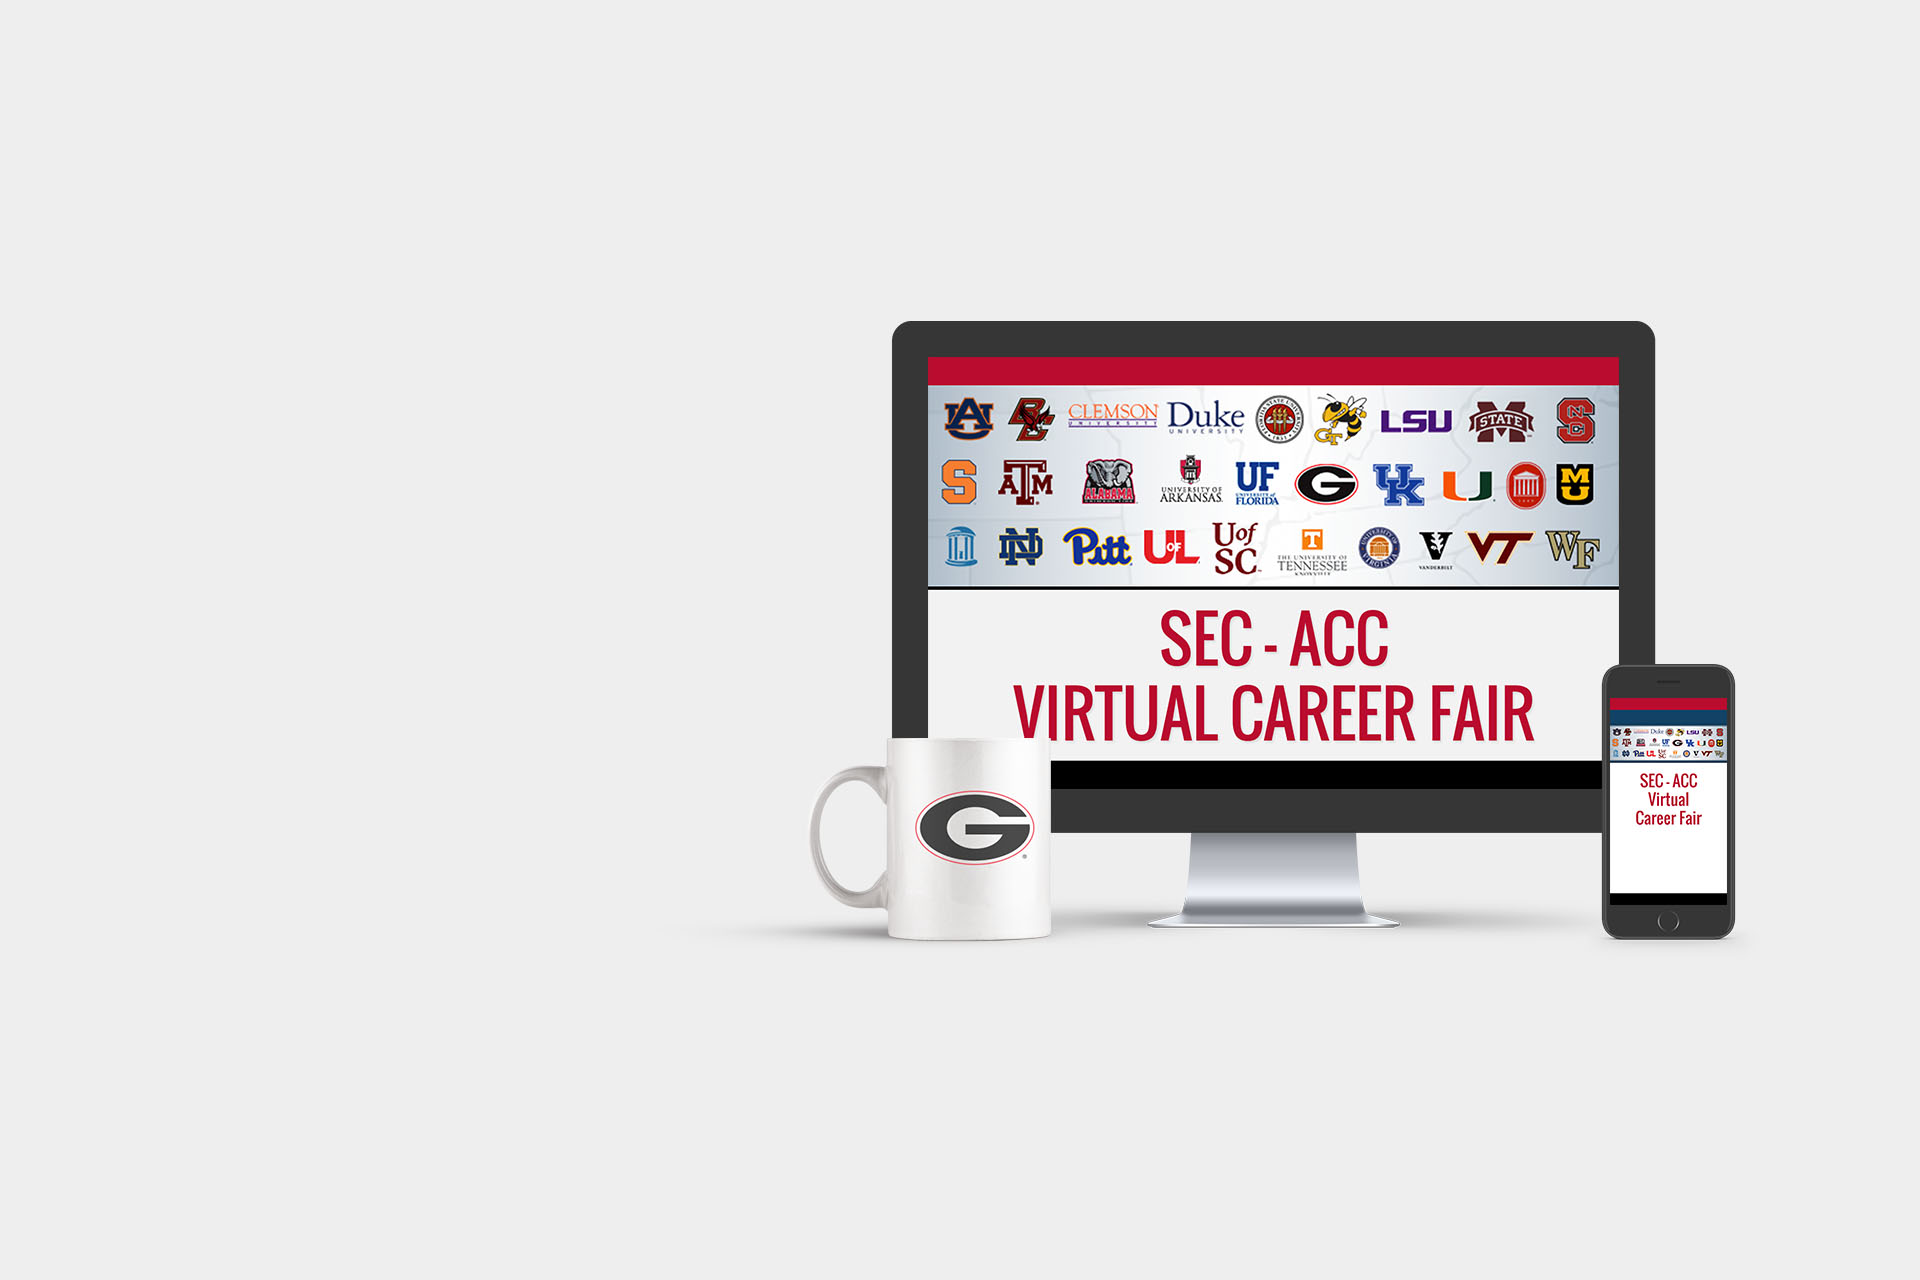 SEC-ACC Virtual Career Fair - April 5, 2023 from 10am until 5pm online 